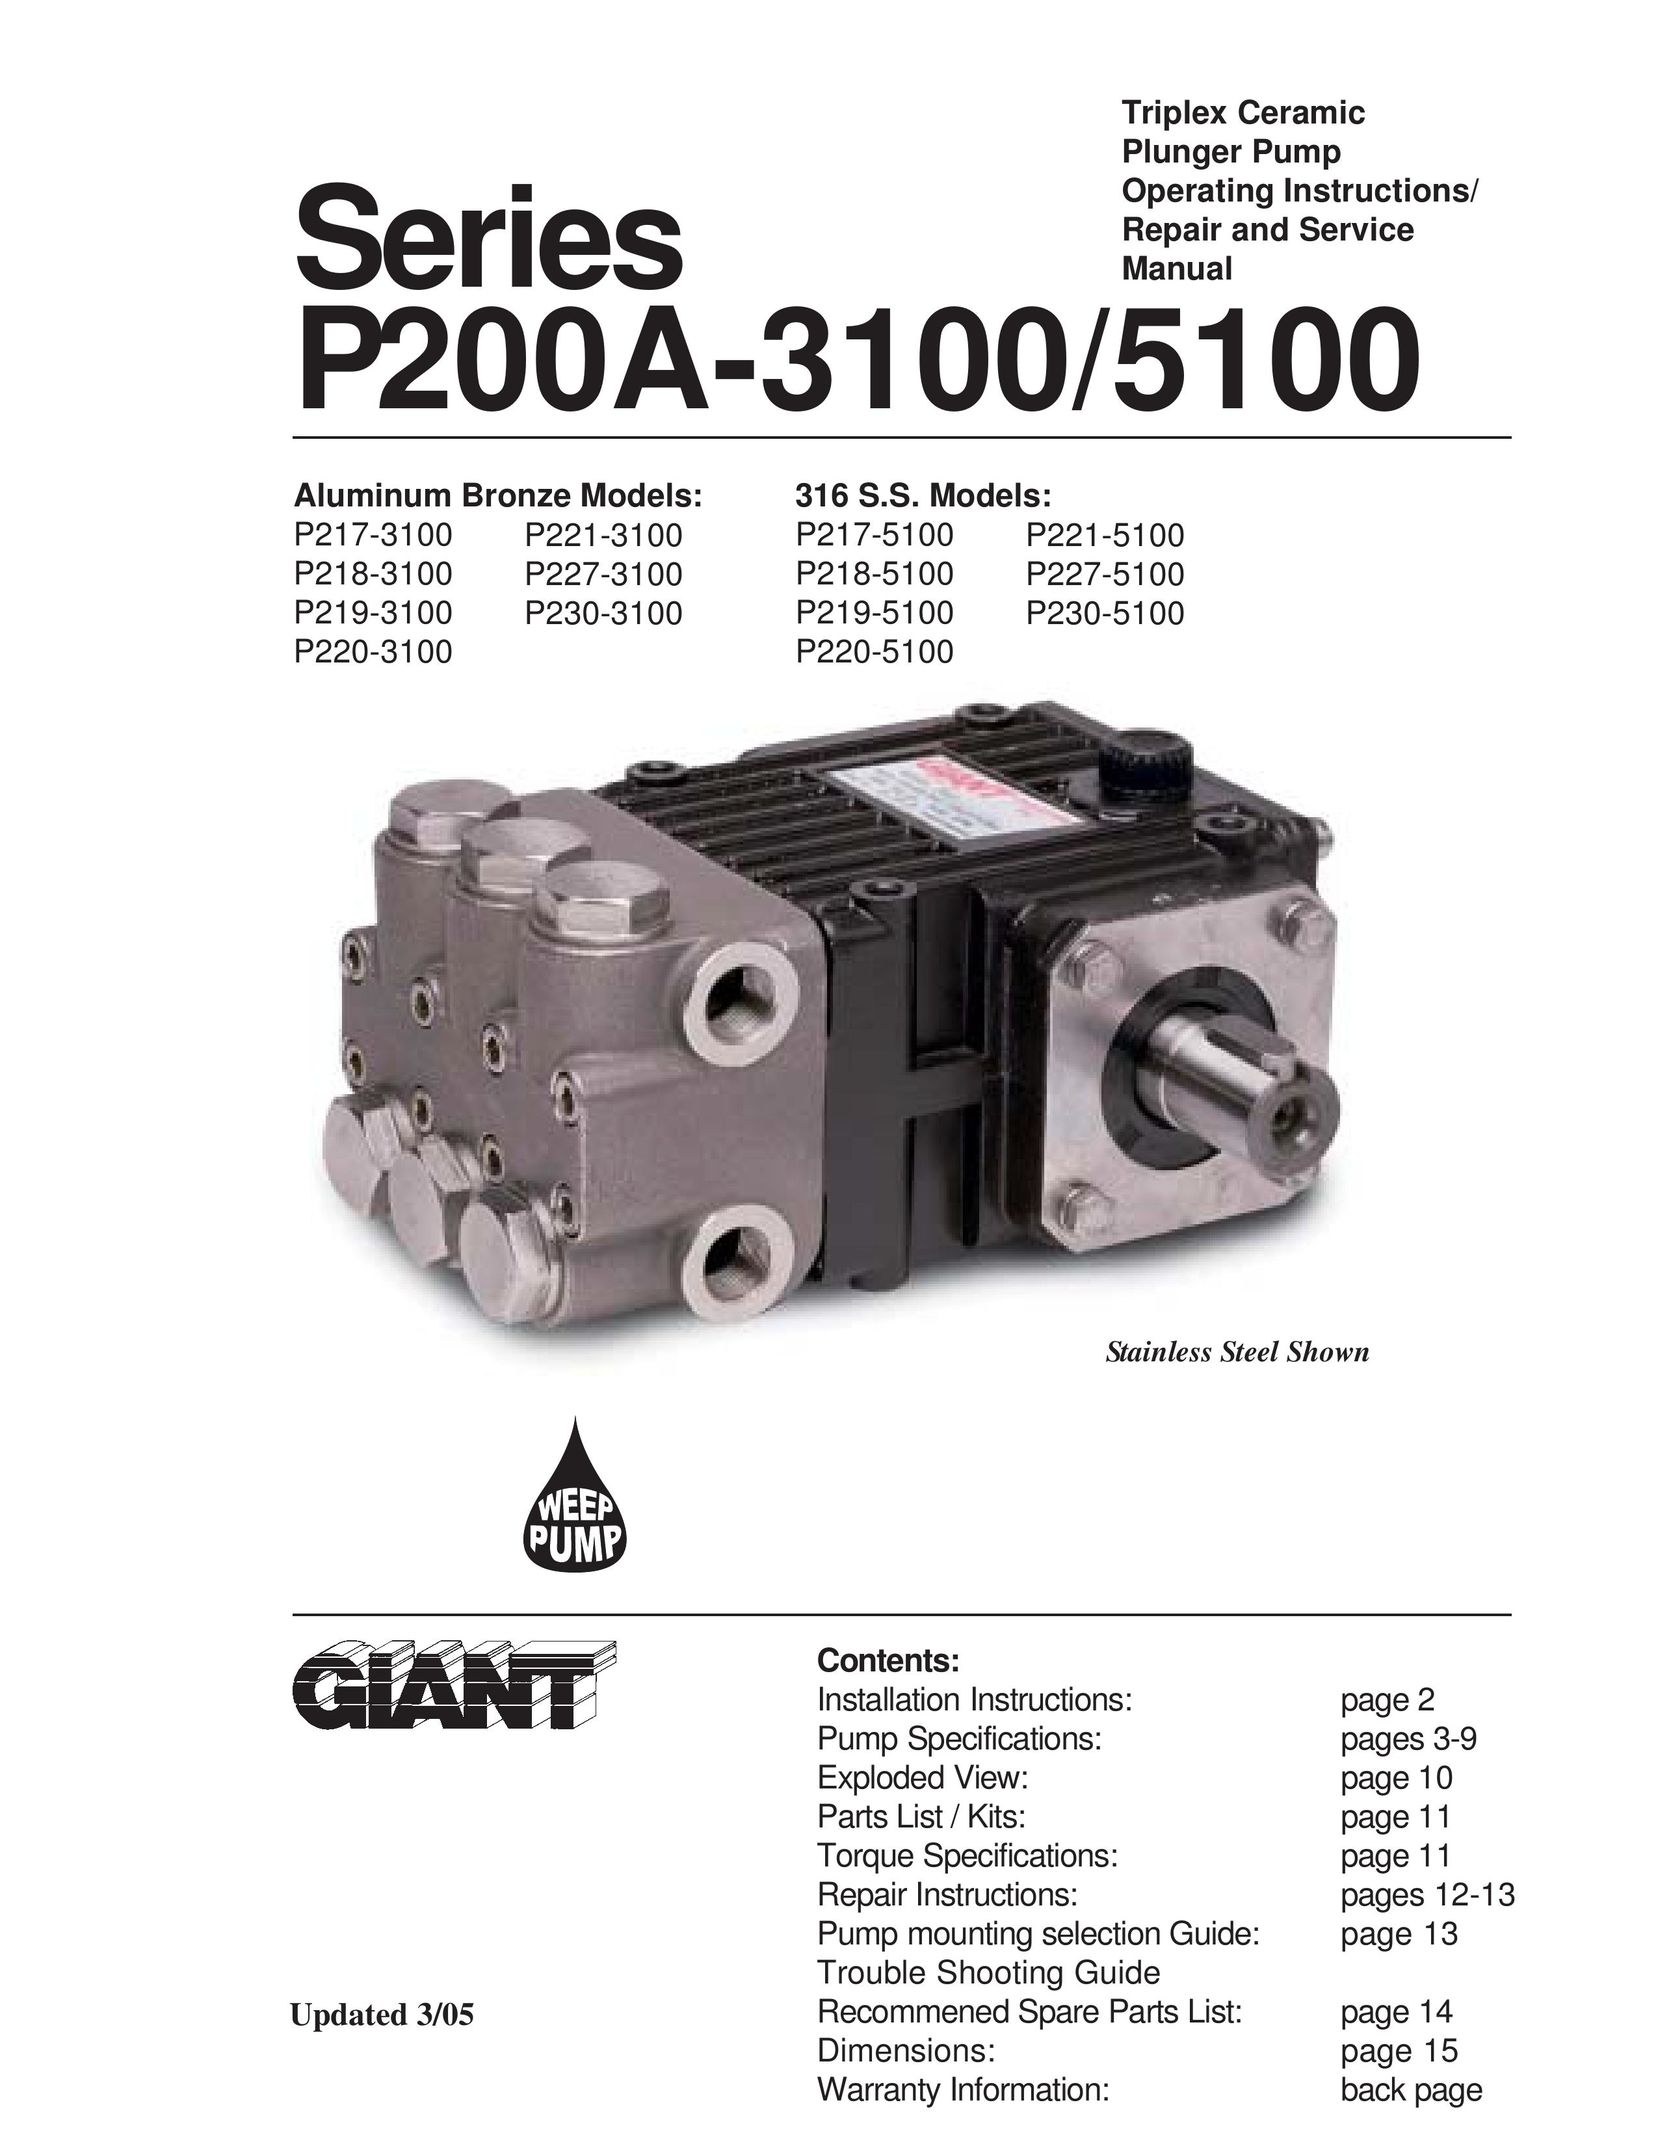 Giant P200A-3100 Heat Pump User Manual